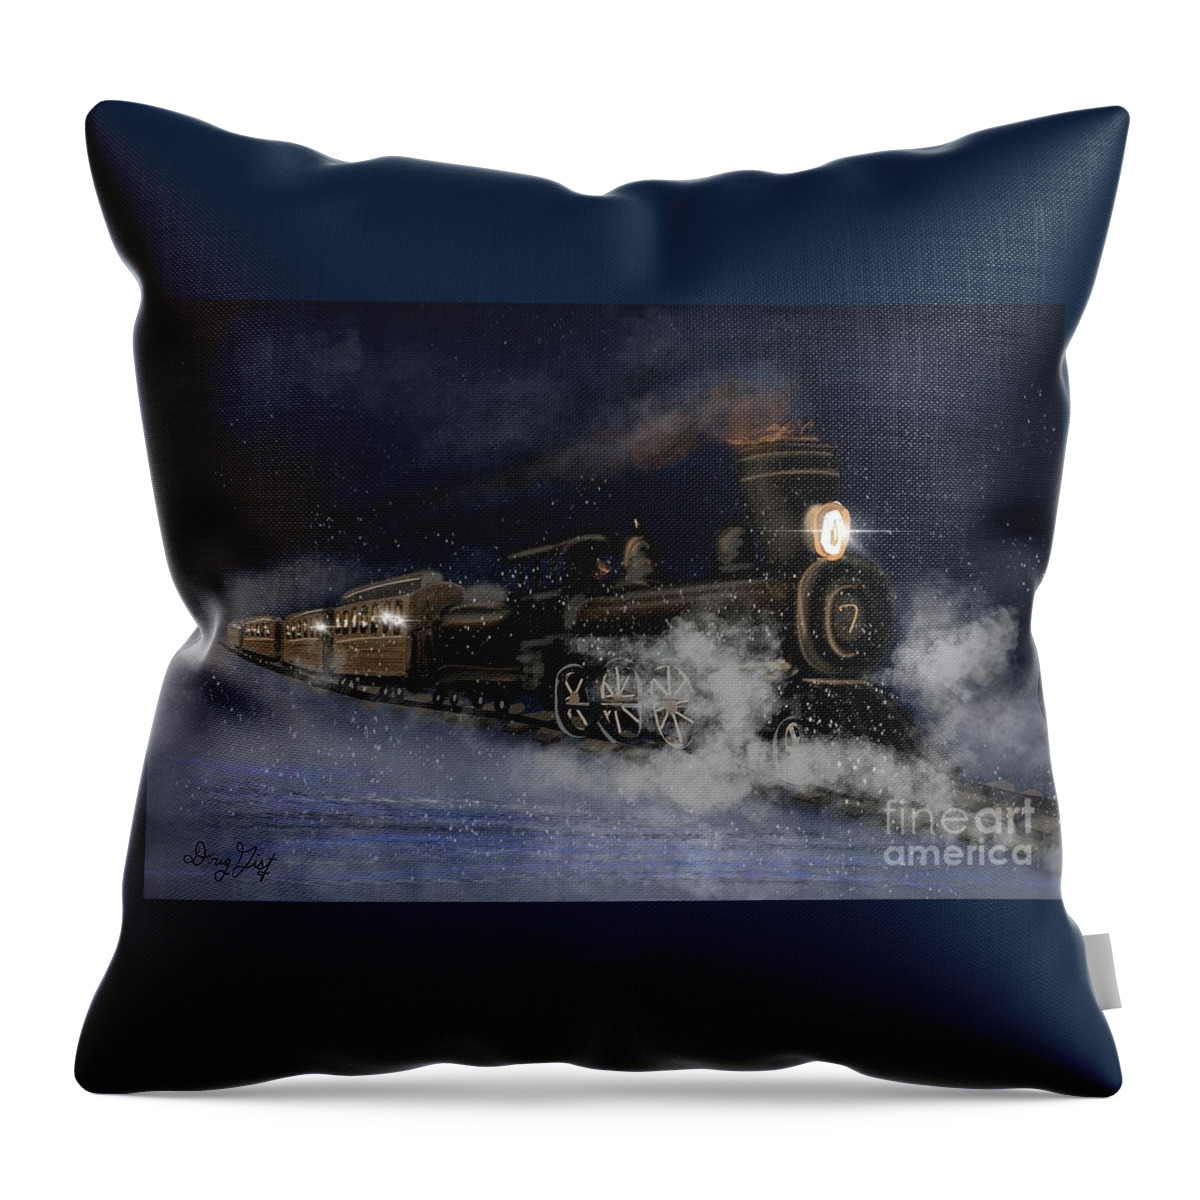 Train Throw Pillow featuring the digital art Snow Train by Doug Gist